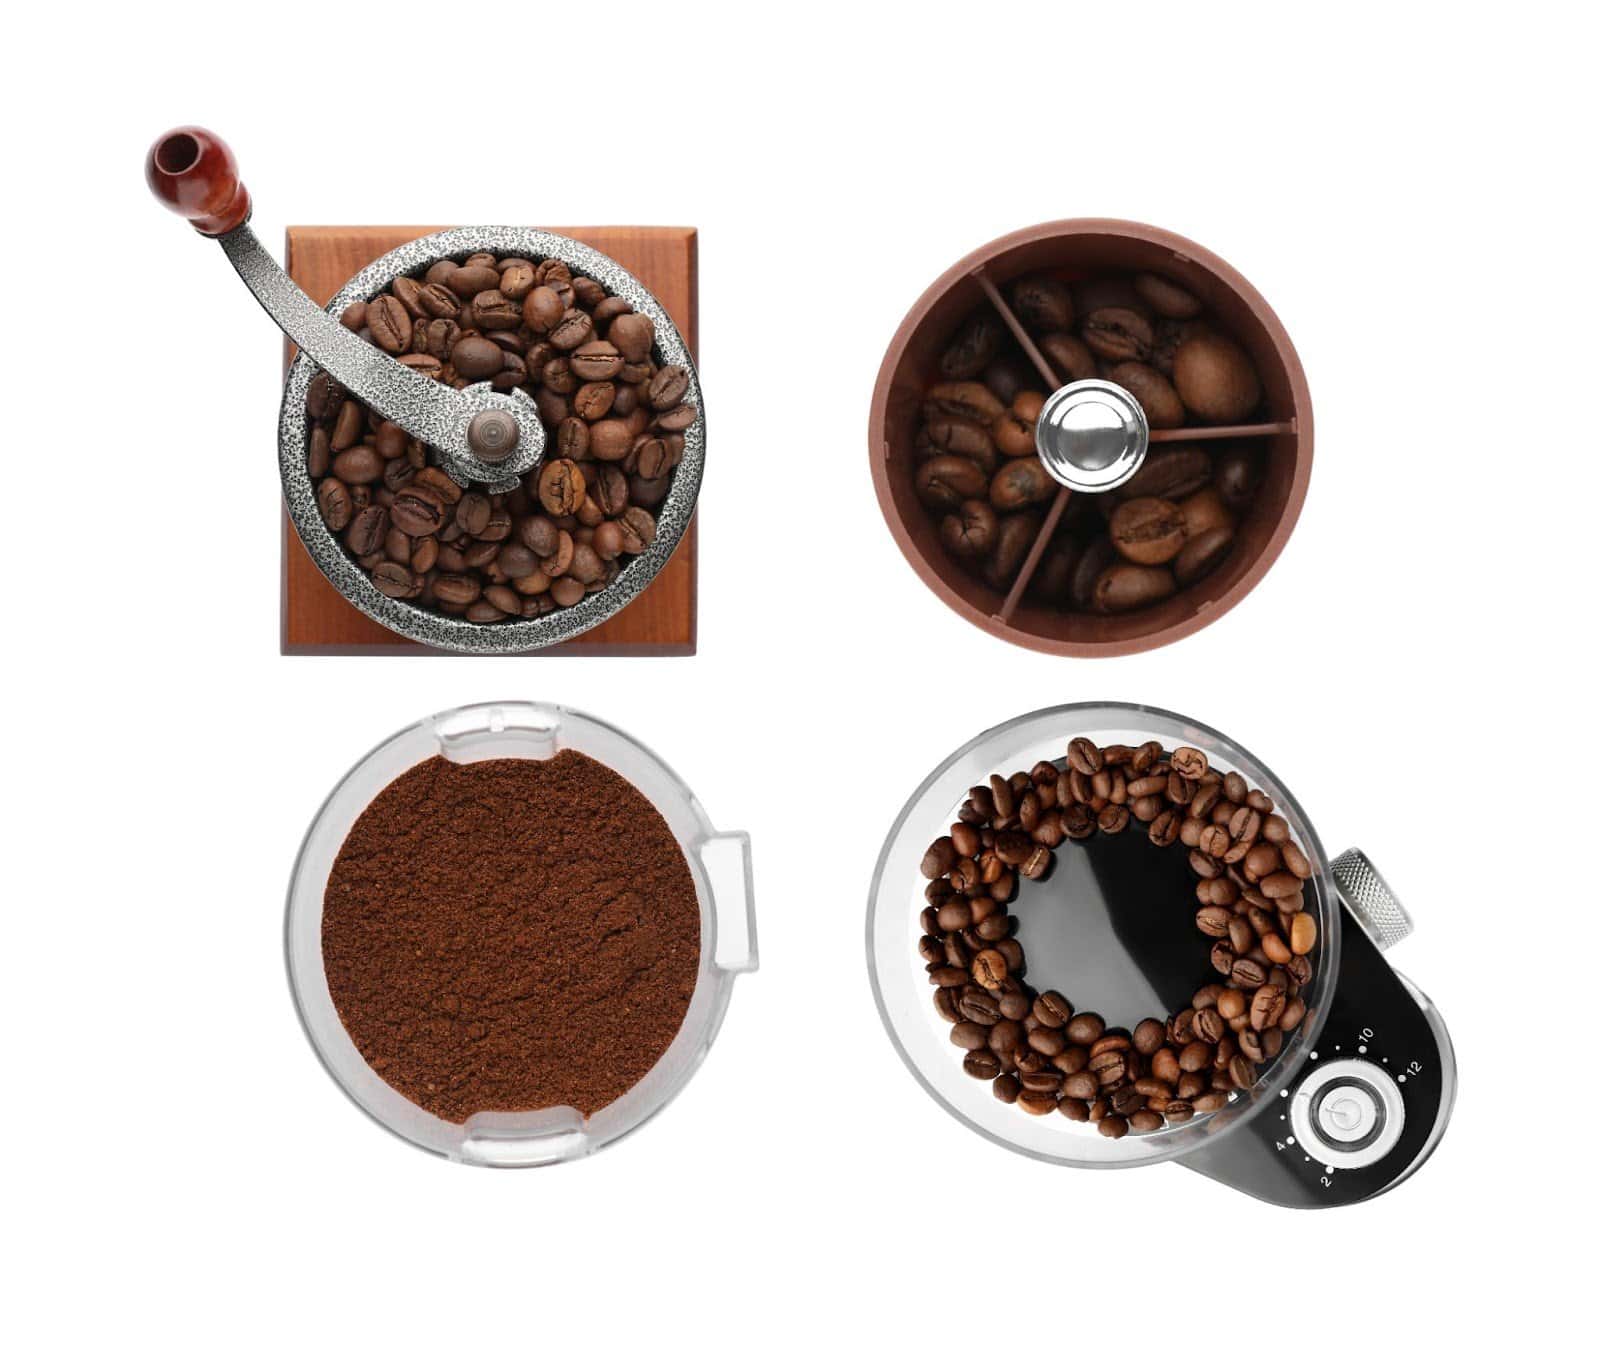 Tips to avoid channeling in espresso: Burr Grinders vs. Blade Grinders
